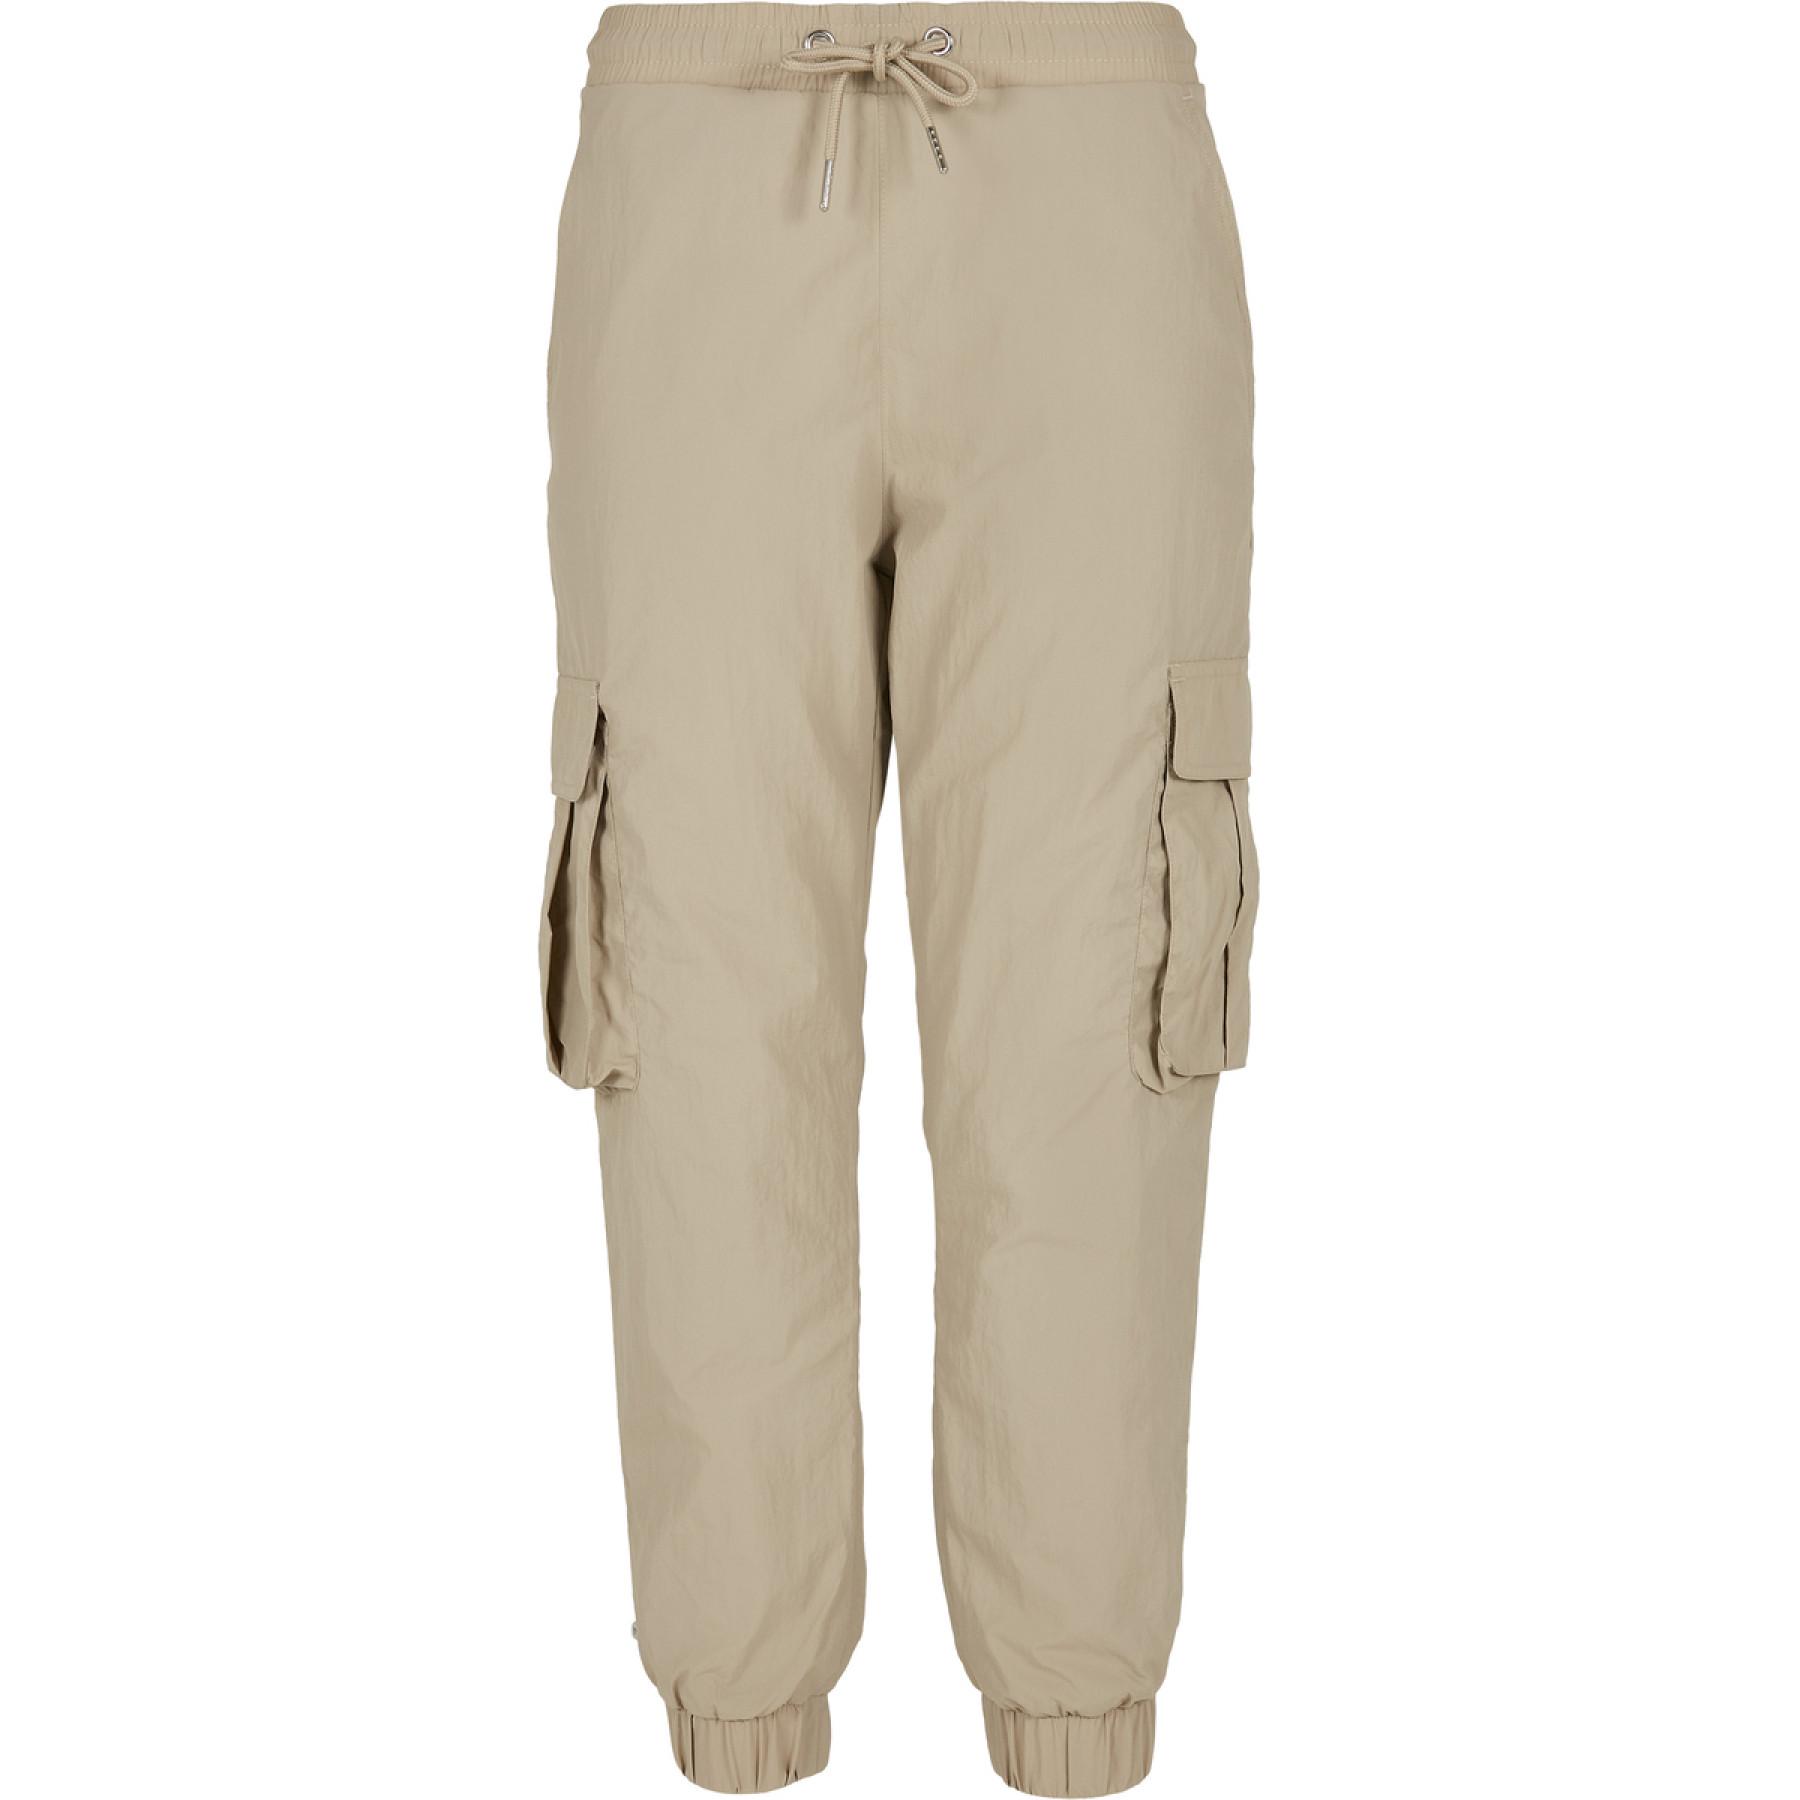 Women's cargo pants Urban Classics high waist crinkle